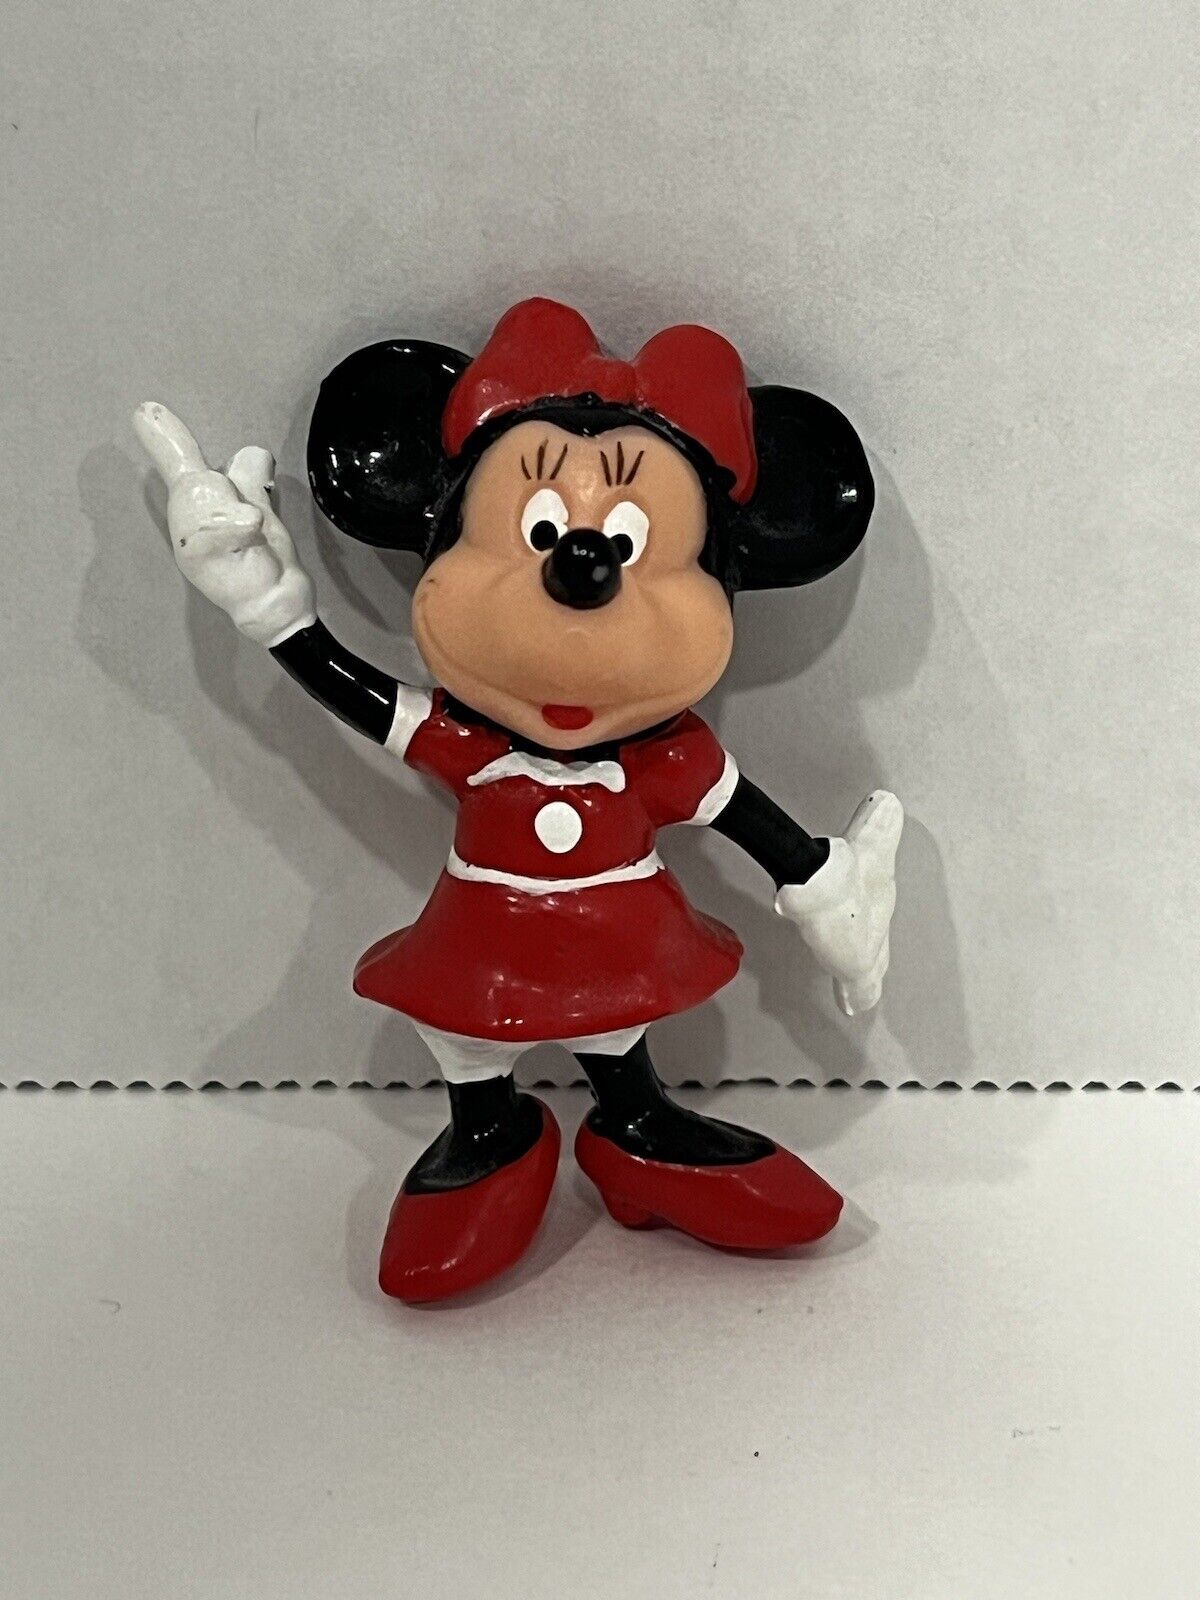 Vintage Applause Disney Classic Minnie Mouse PVC Figurine Red Dress 2”